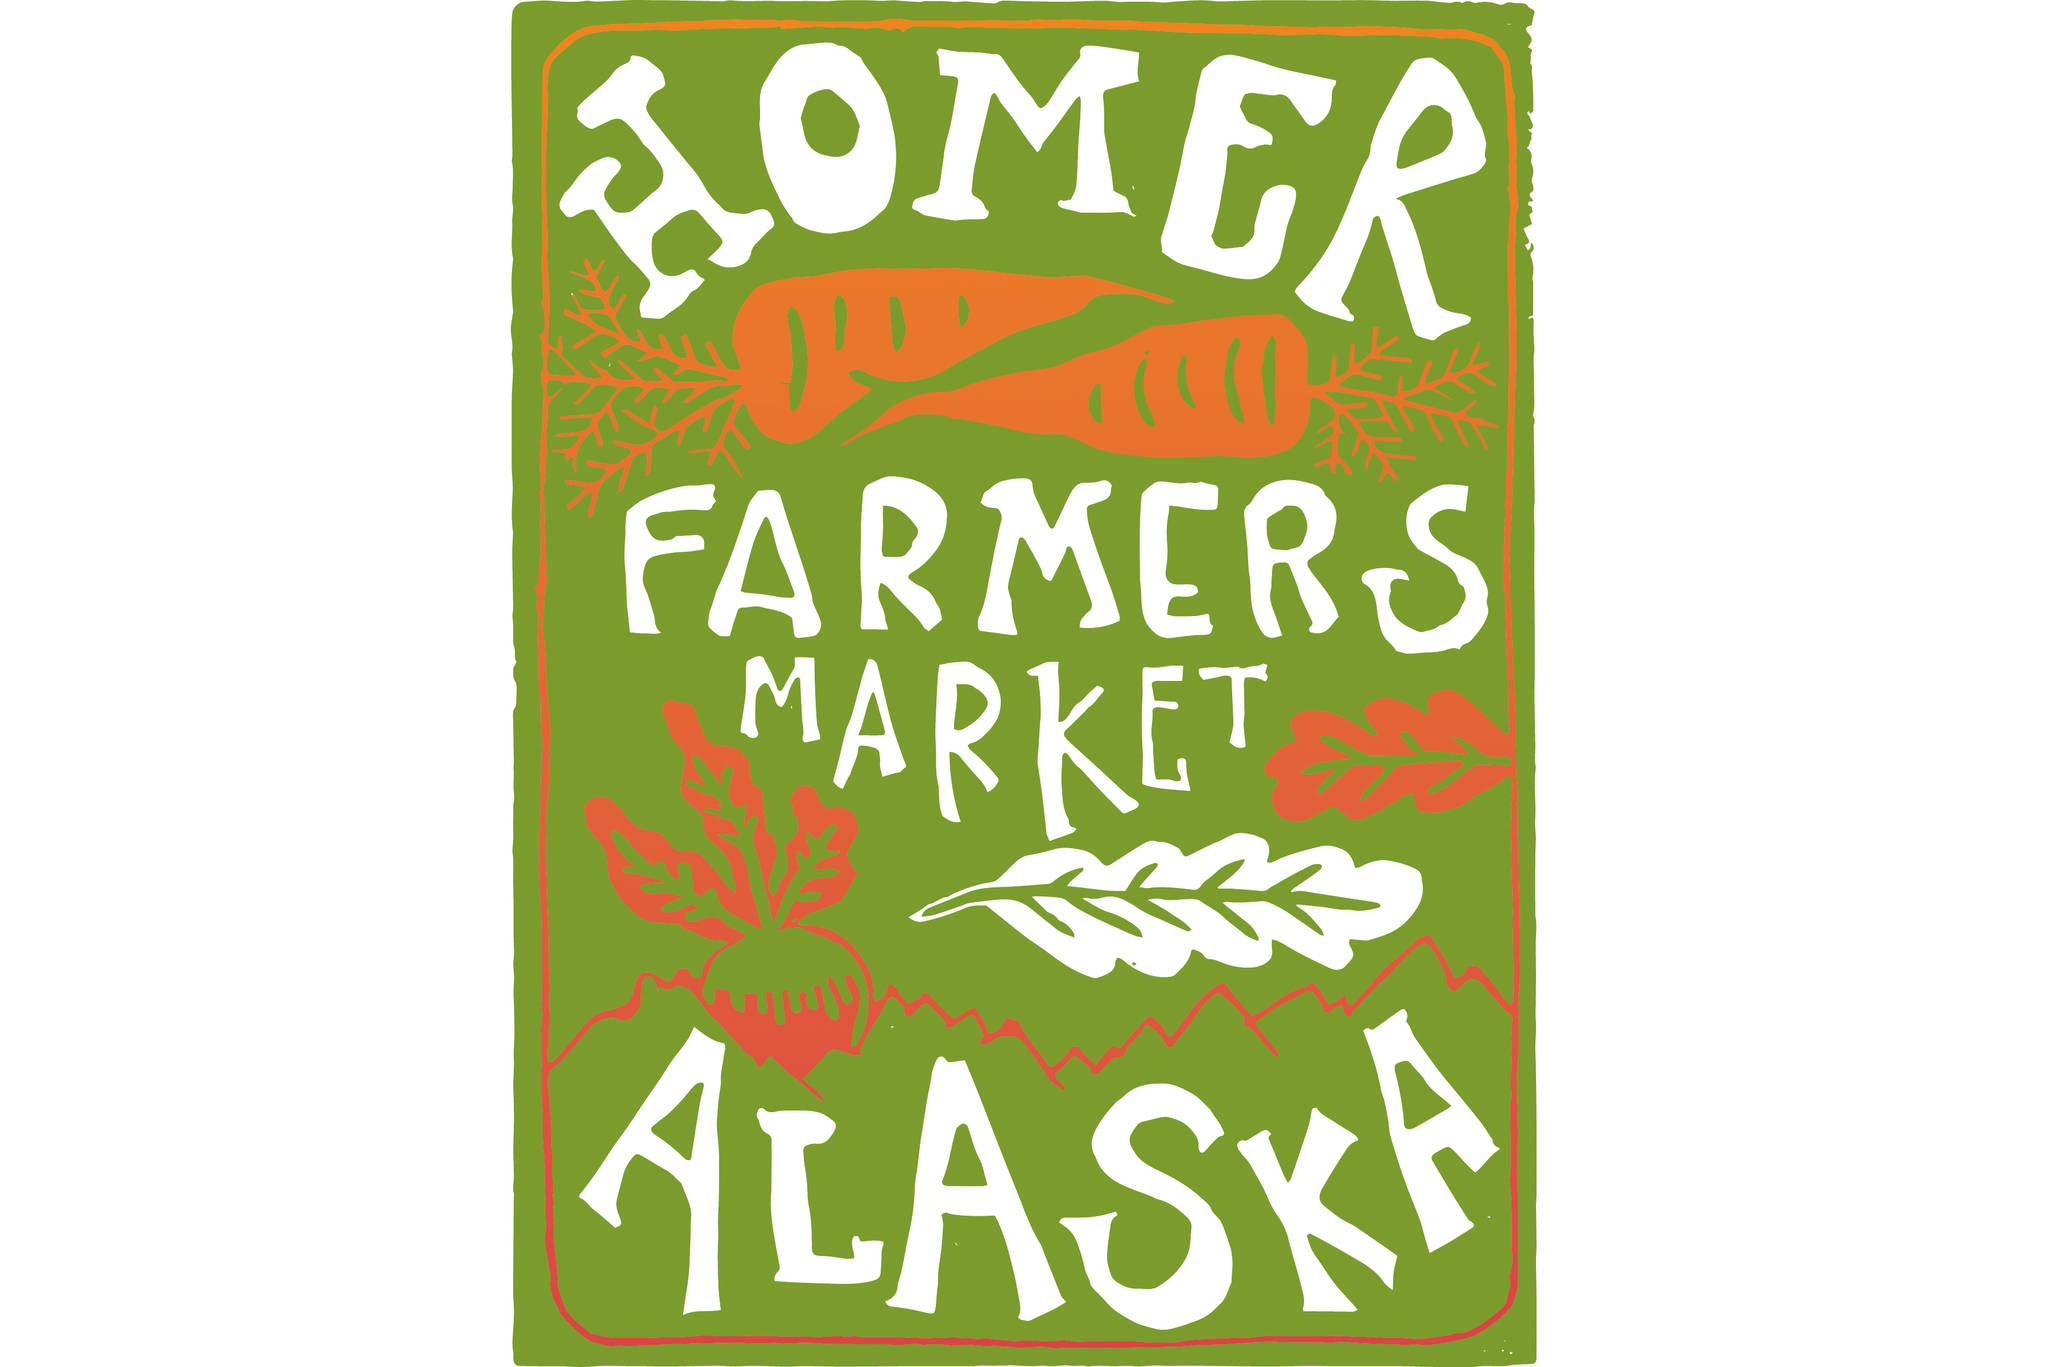 Homer Farmers Market: Learn something new at Farmers Market